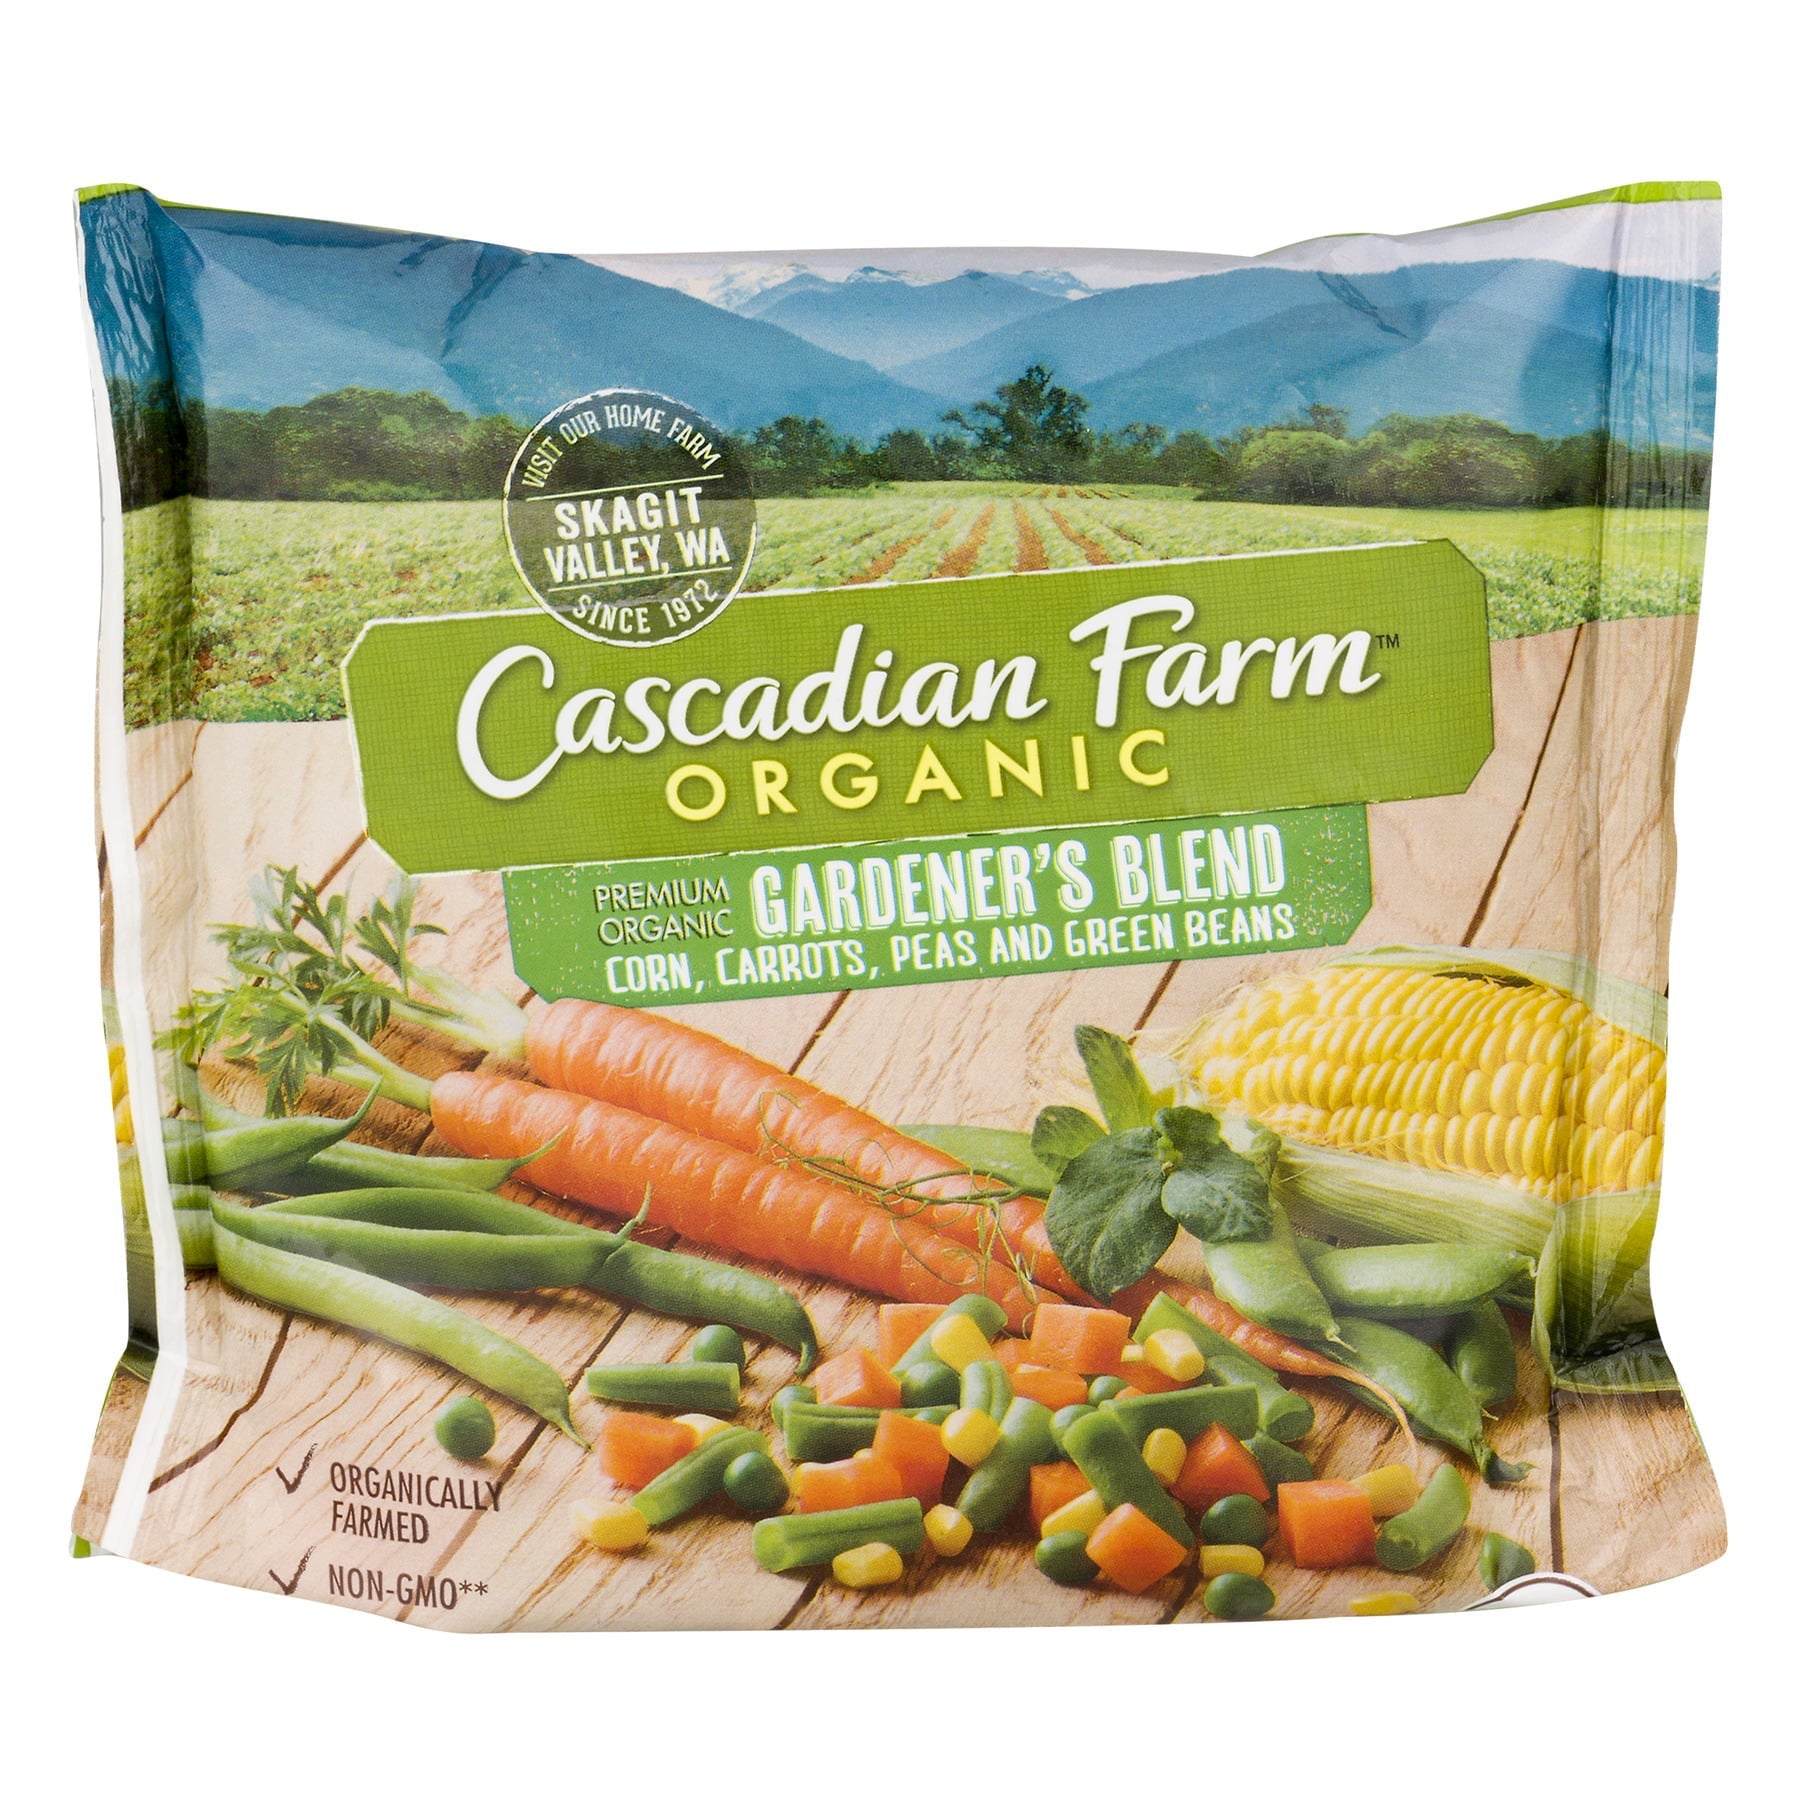 Cascadian Farm Organic Premium Gardener's Blend 10 Oz Bag